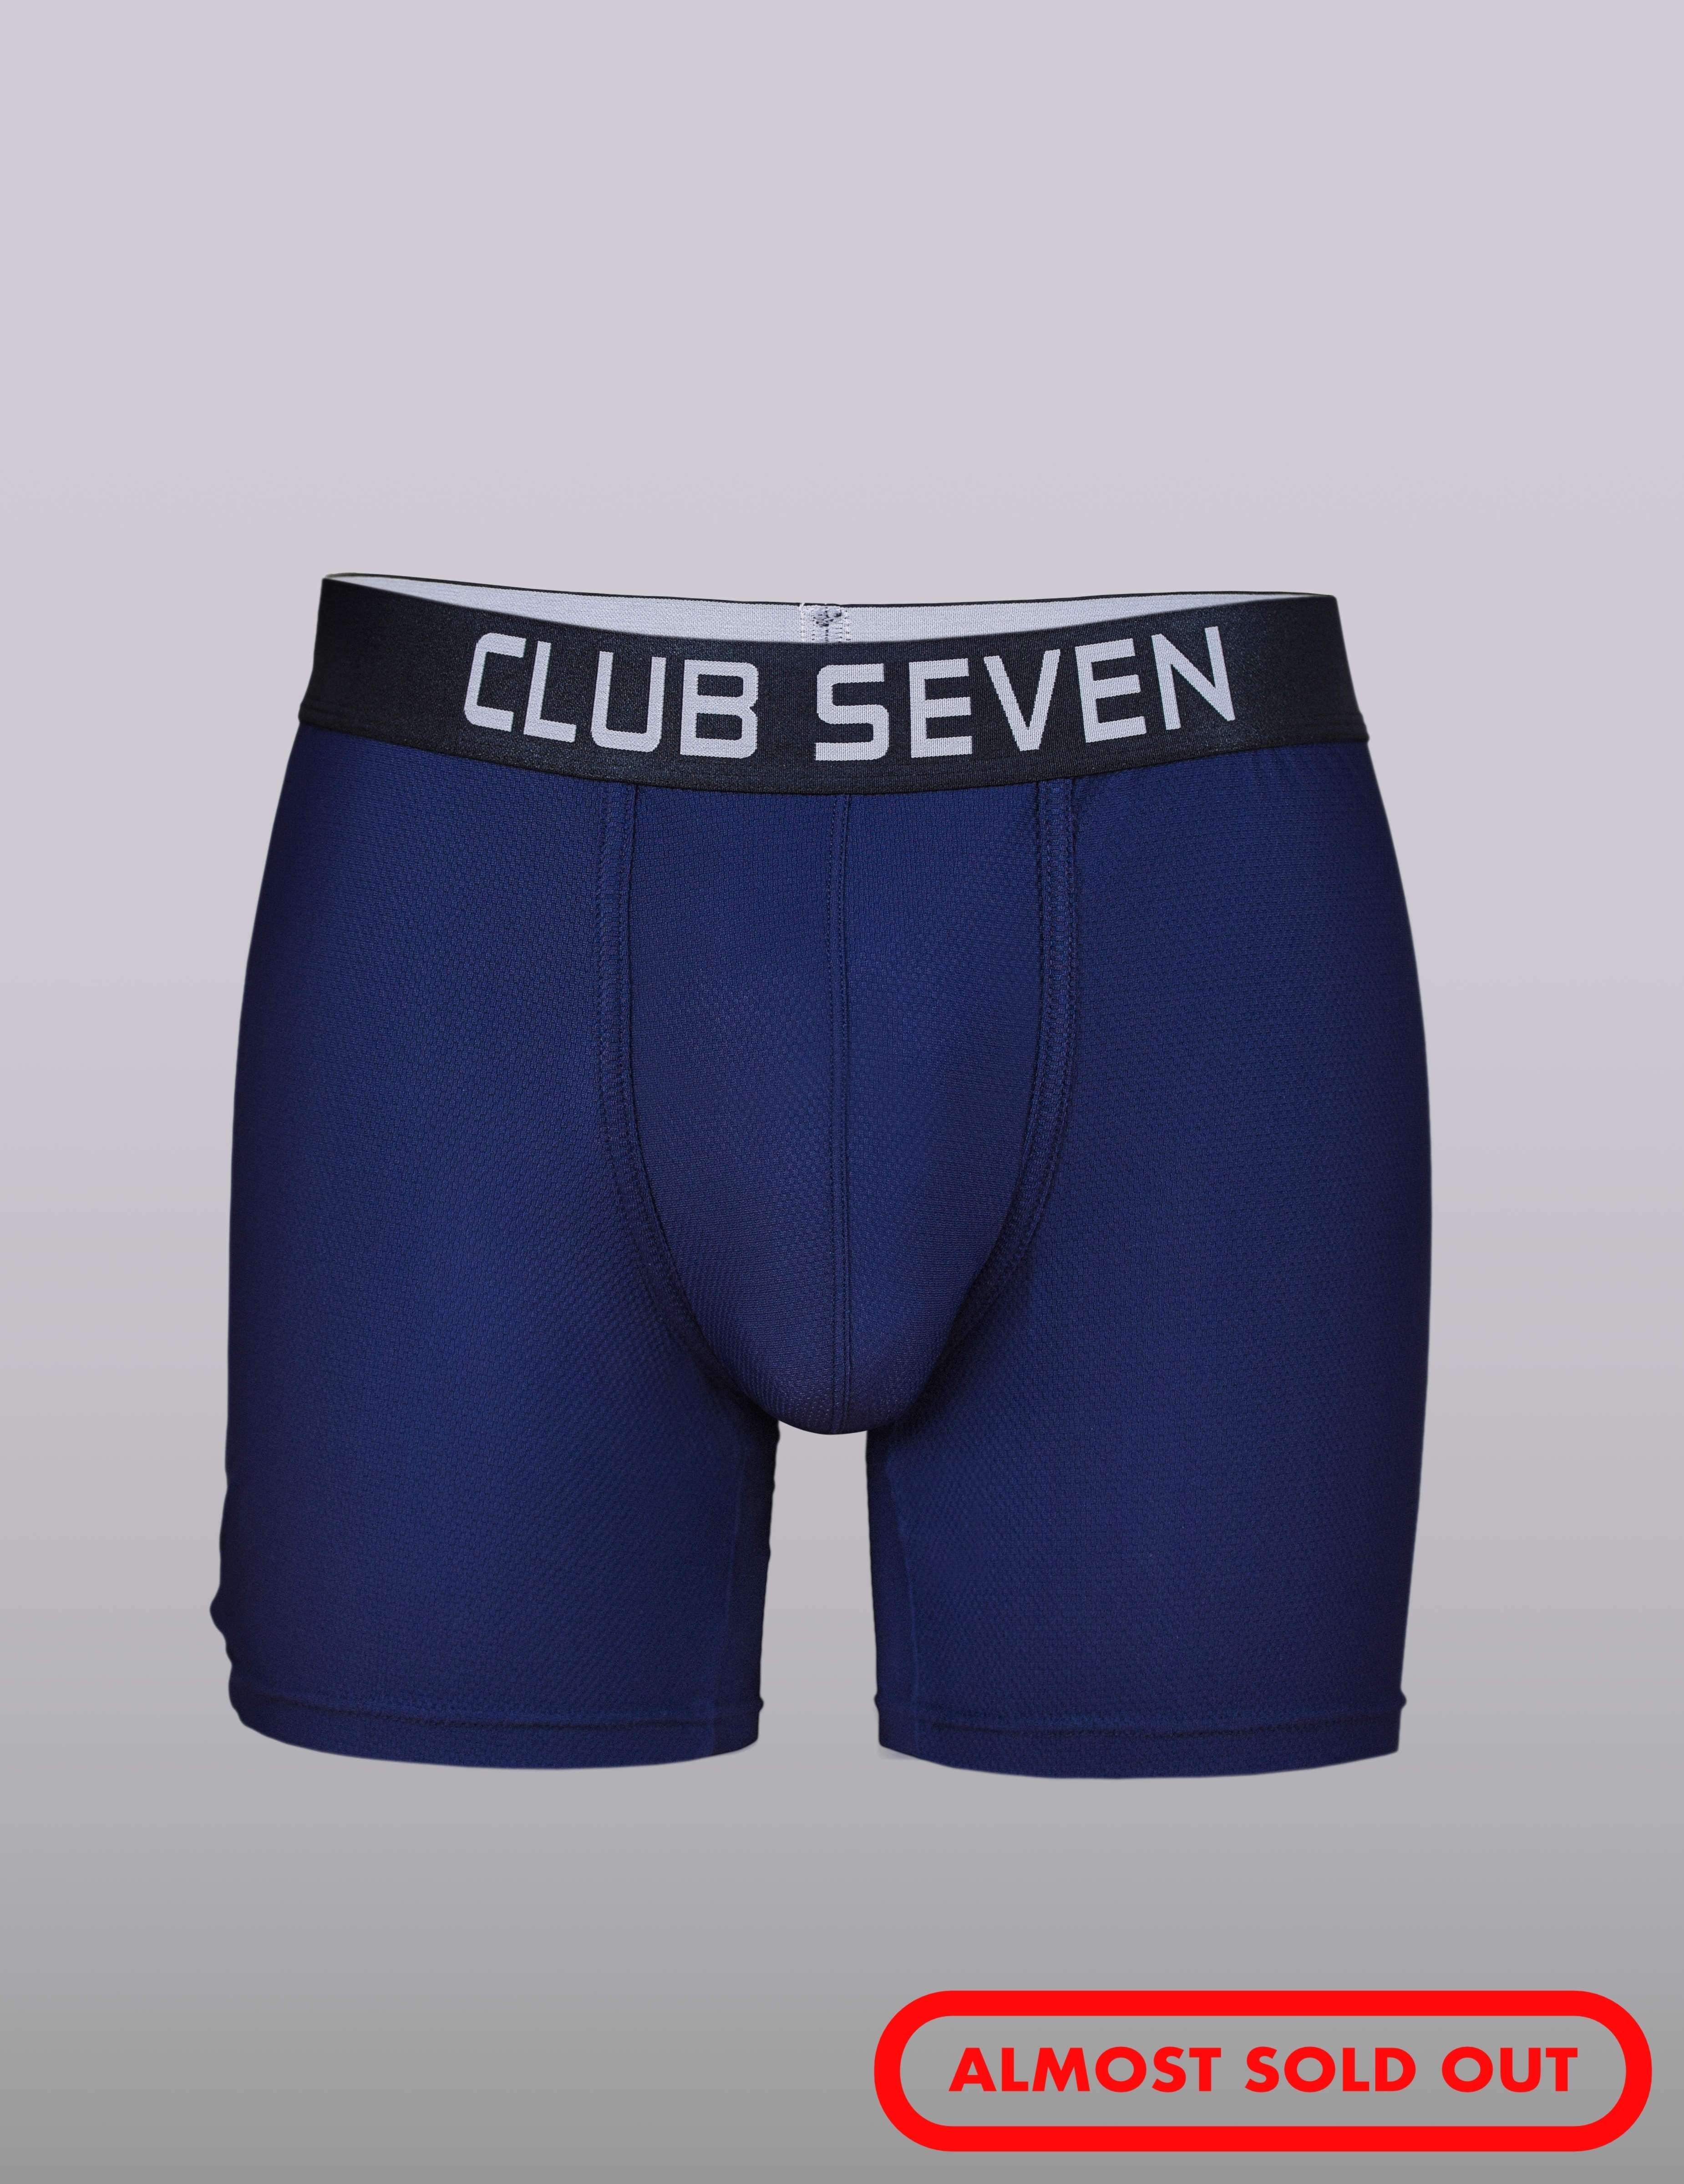 Mens Boxers shorts: Defined Crotch - Blue - Bulge boxer shorts briefs 